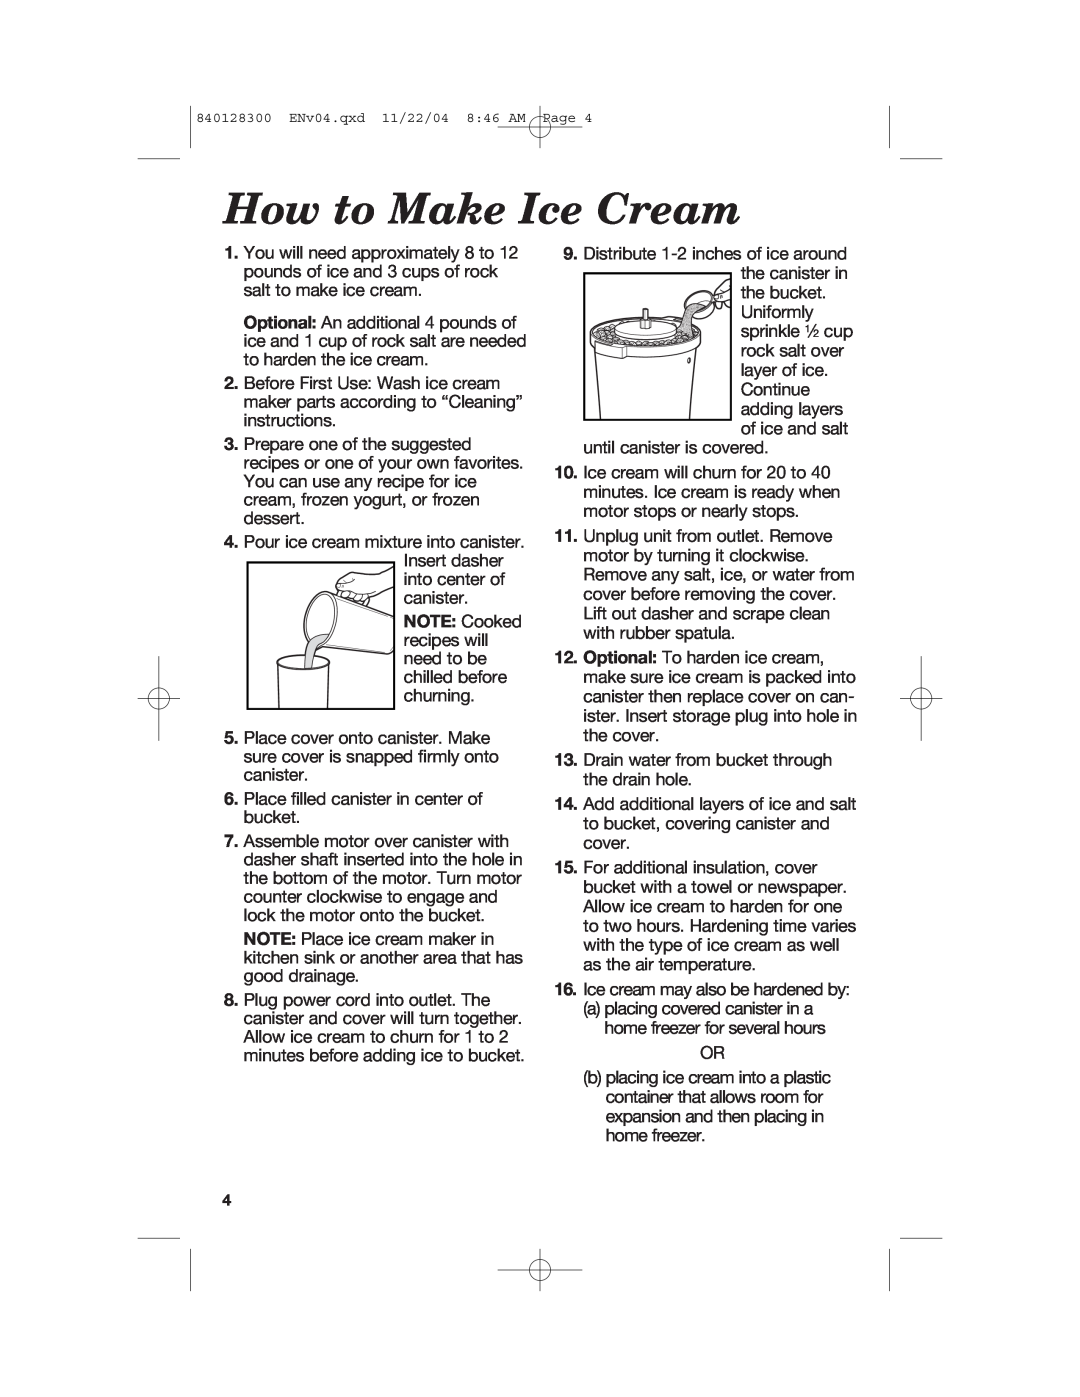 Hamilton Beach 68330 manual How to Make Ice Cream 